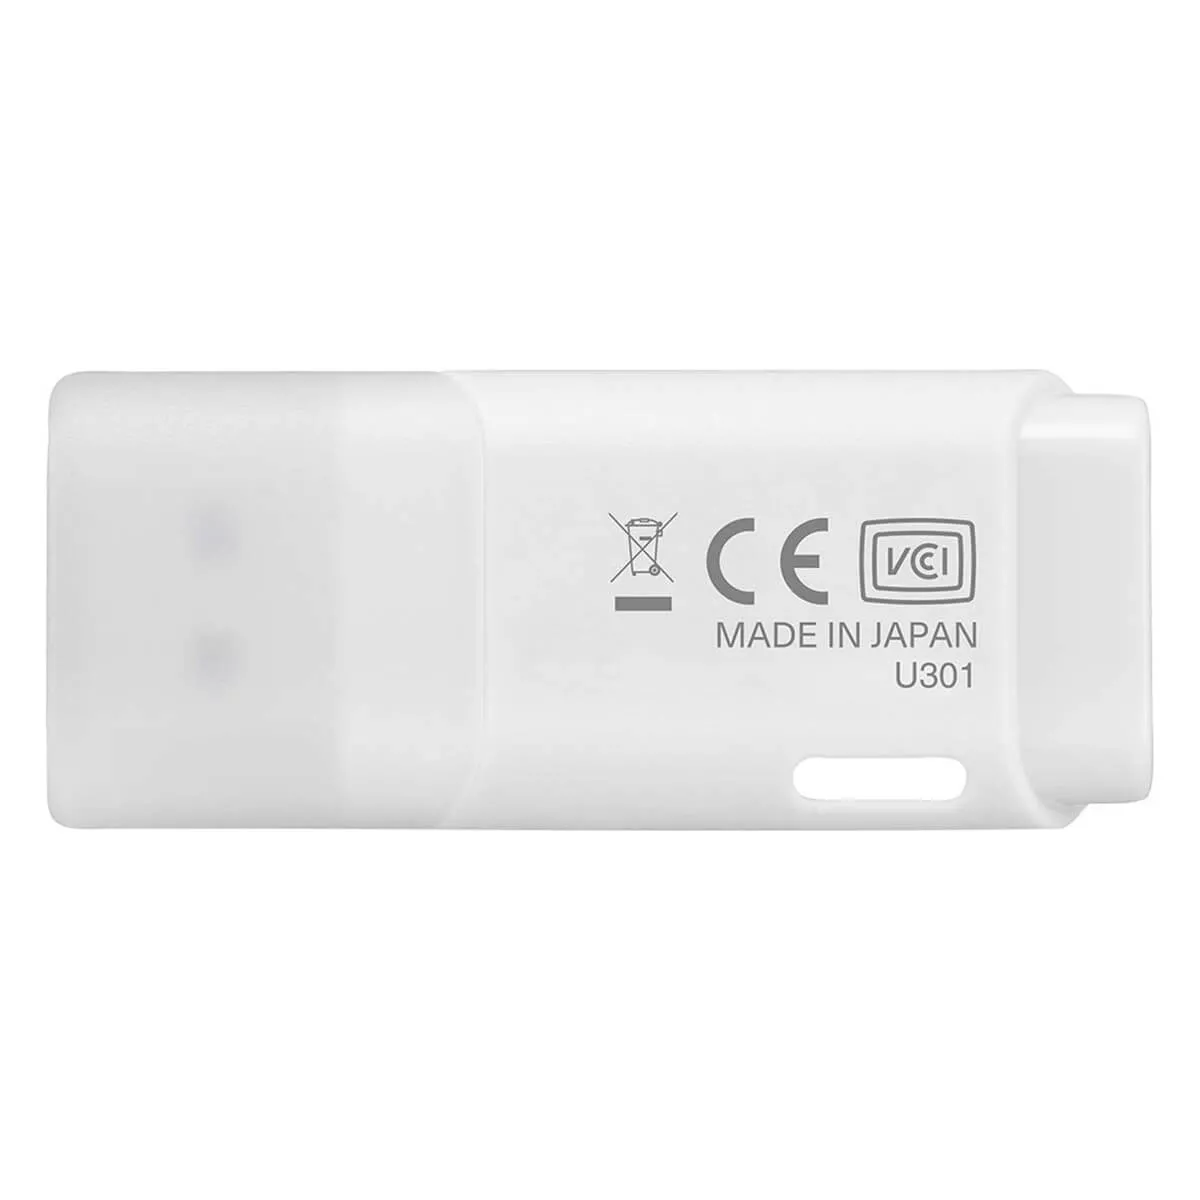 TransMemory U301 USB Flash Drive